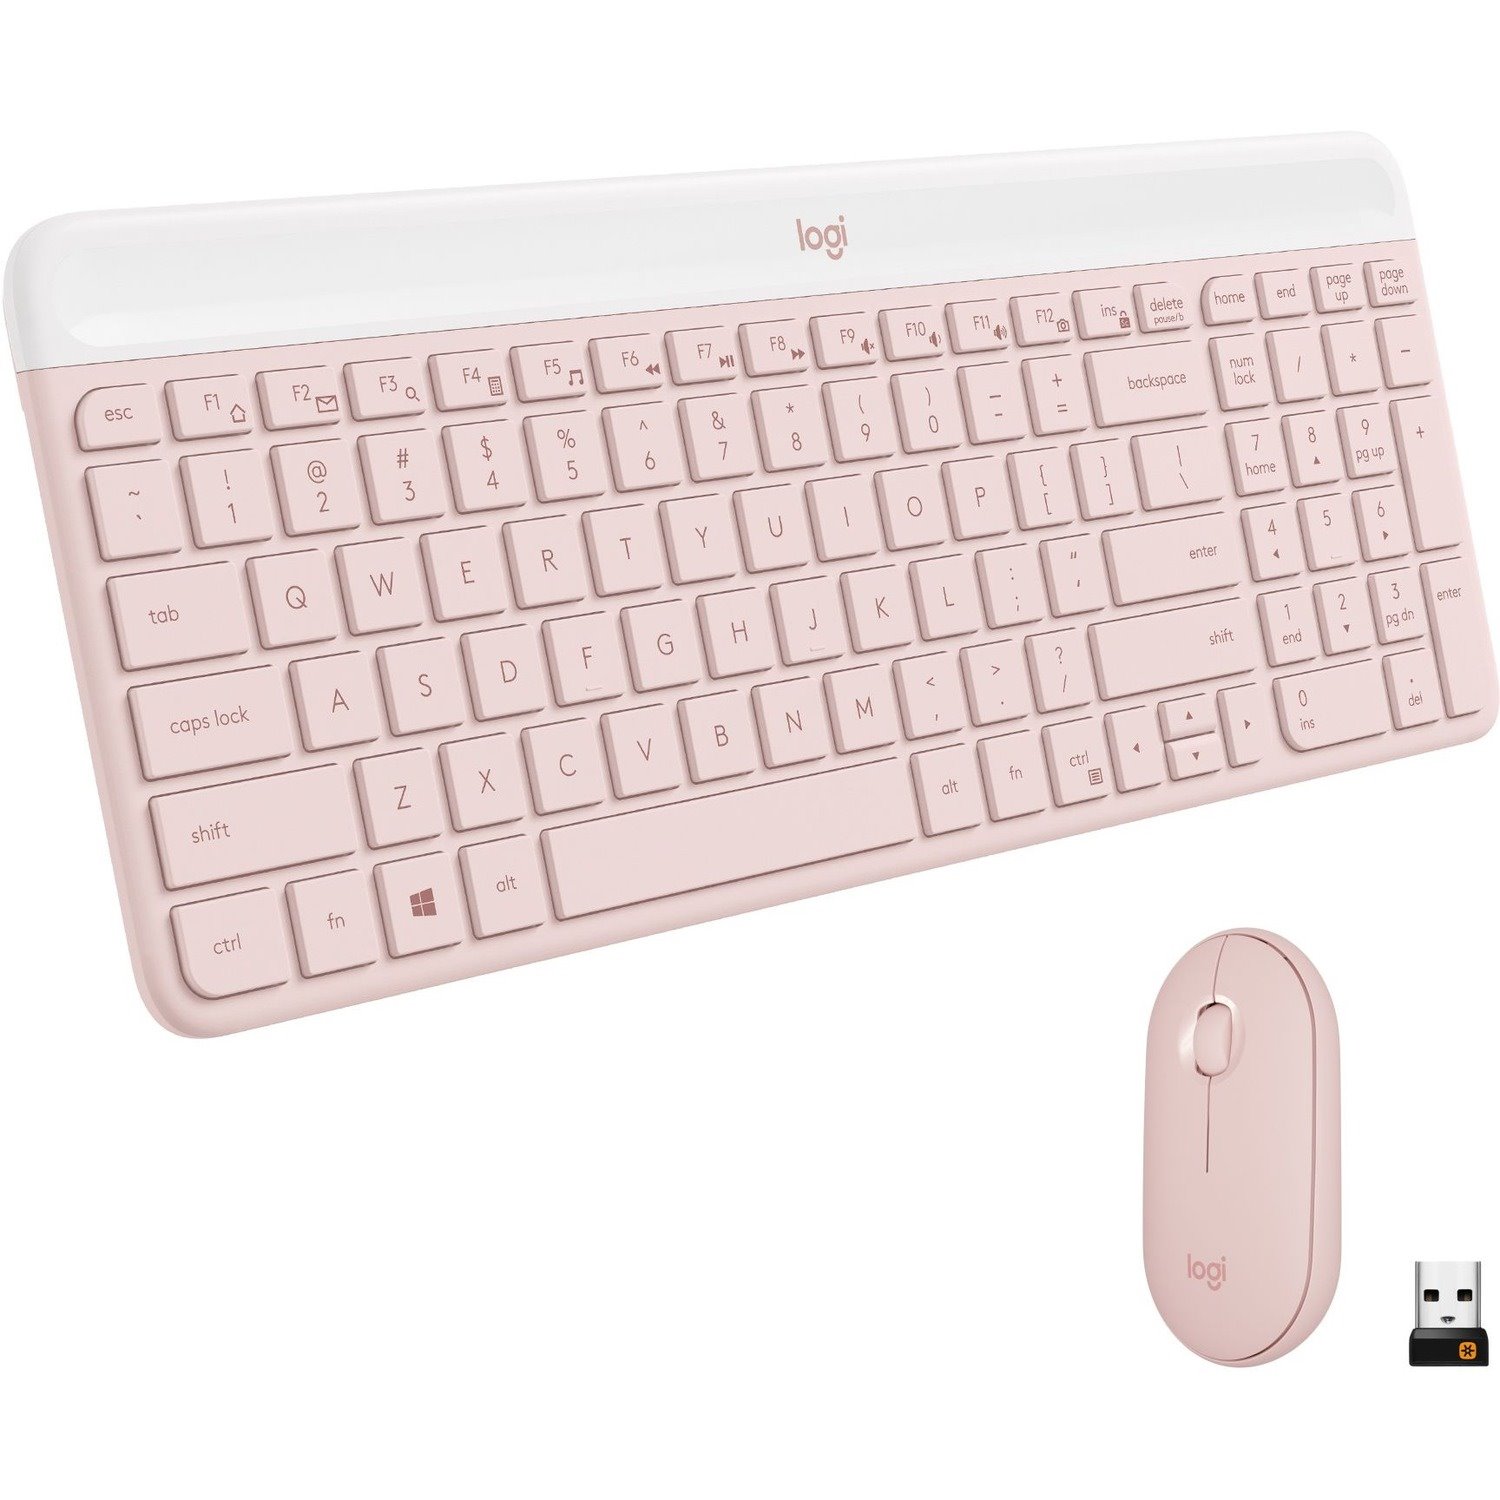 Logitech MK470 Keyboard & Mouse